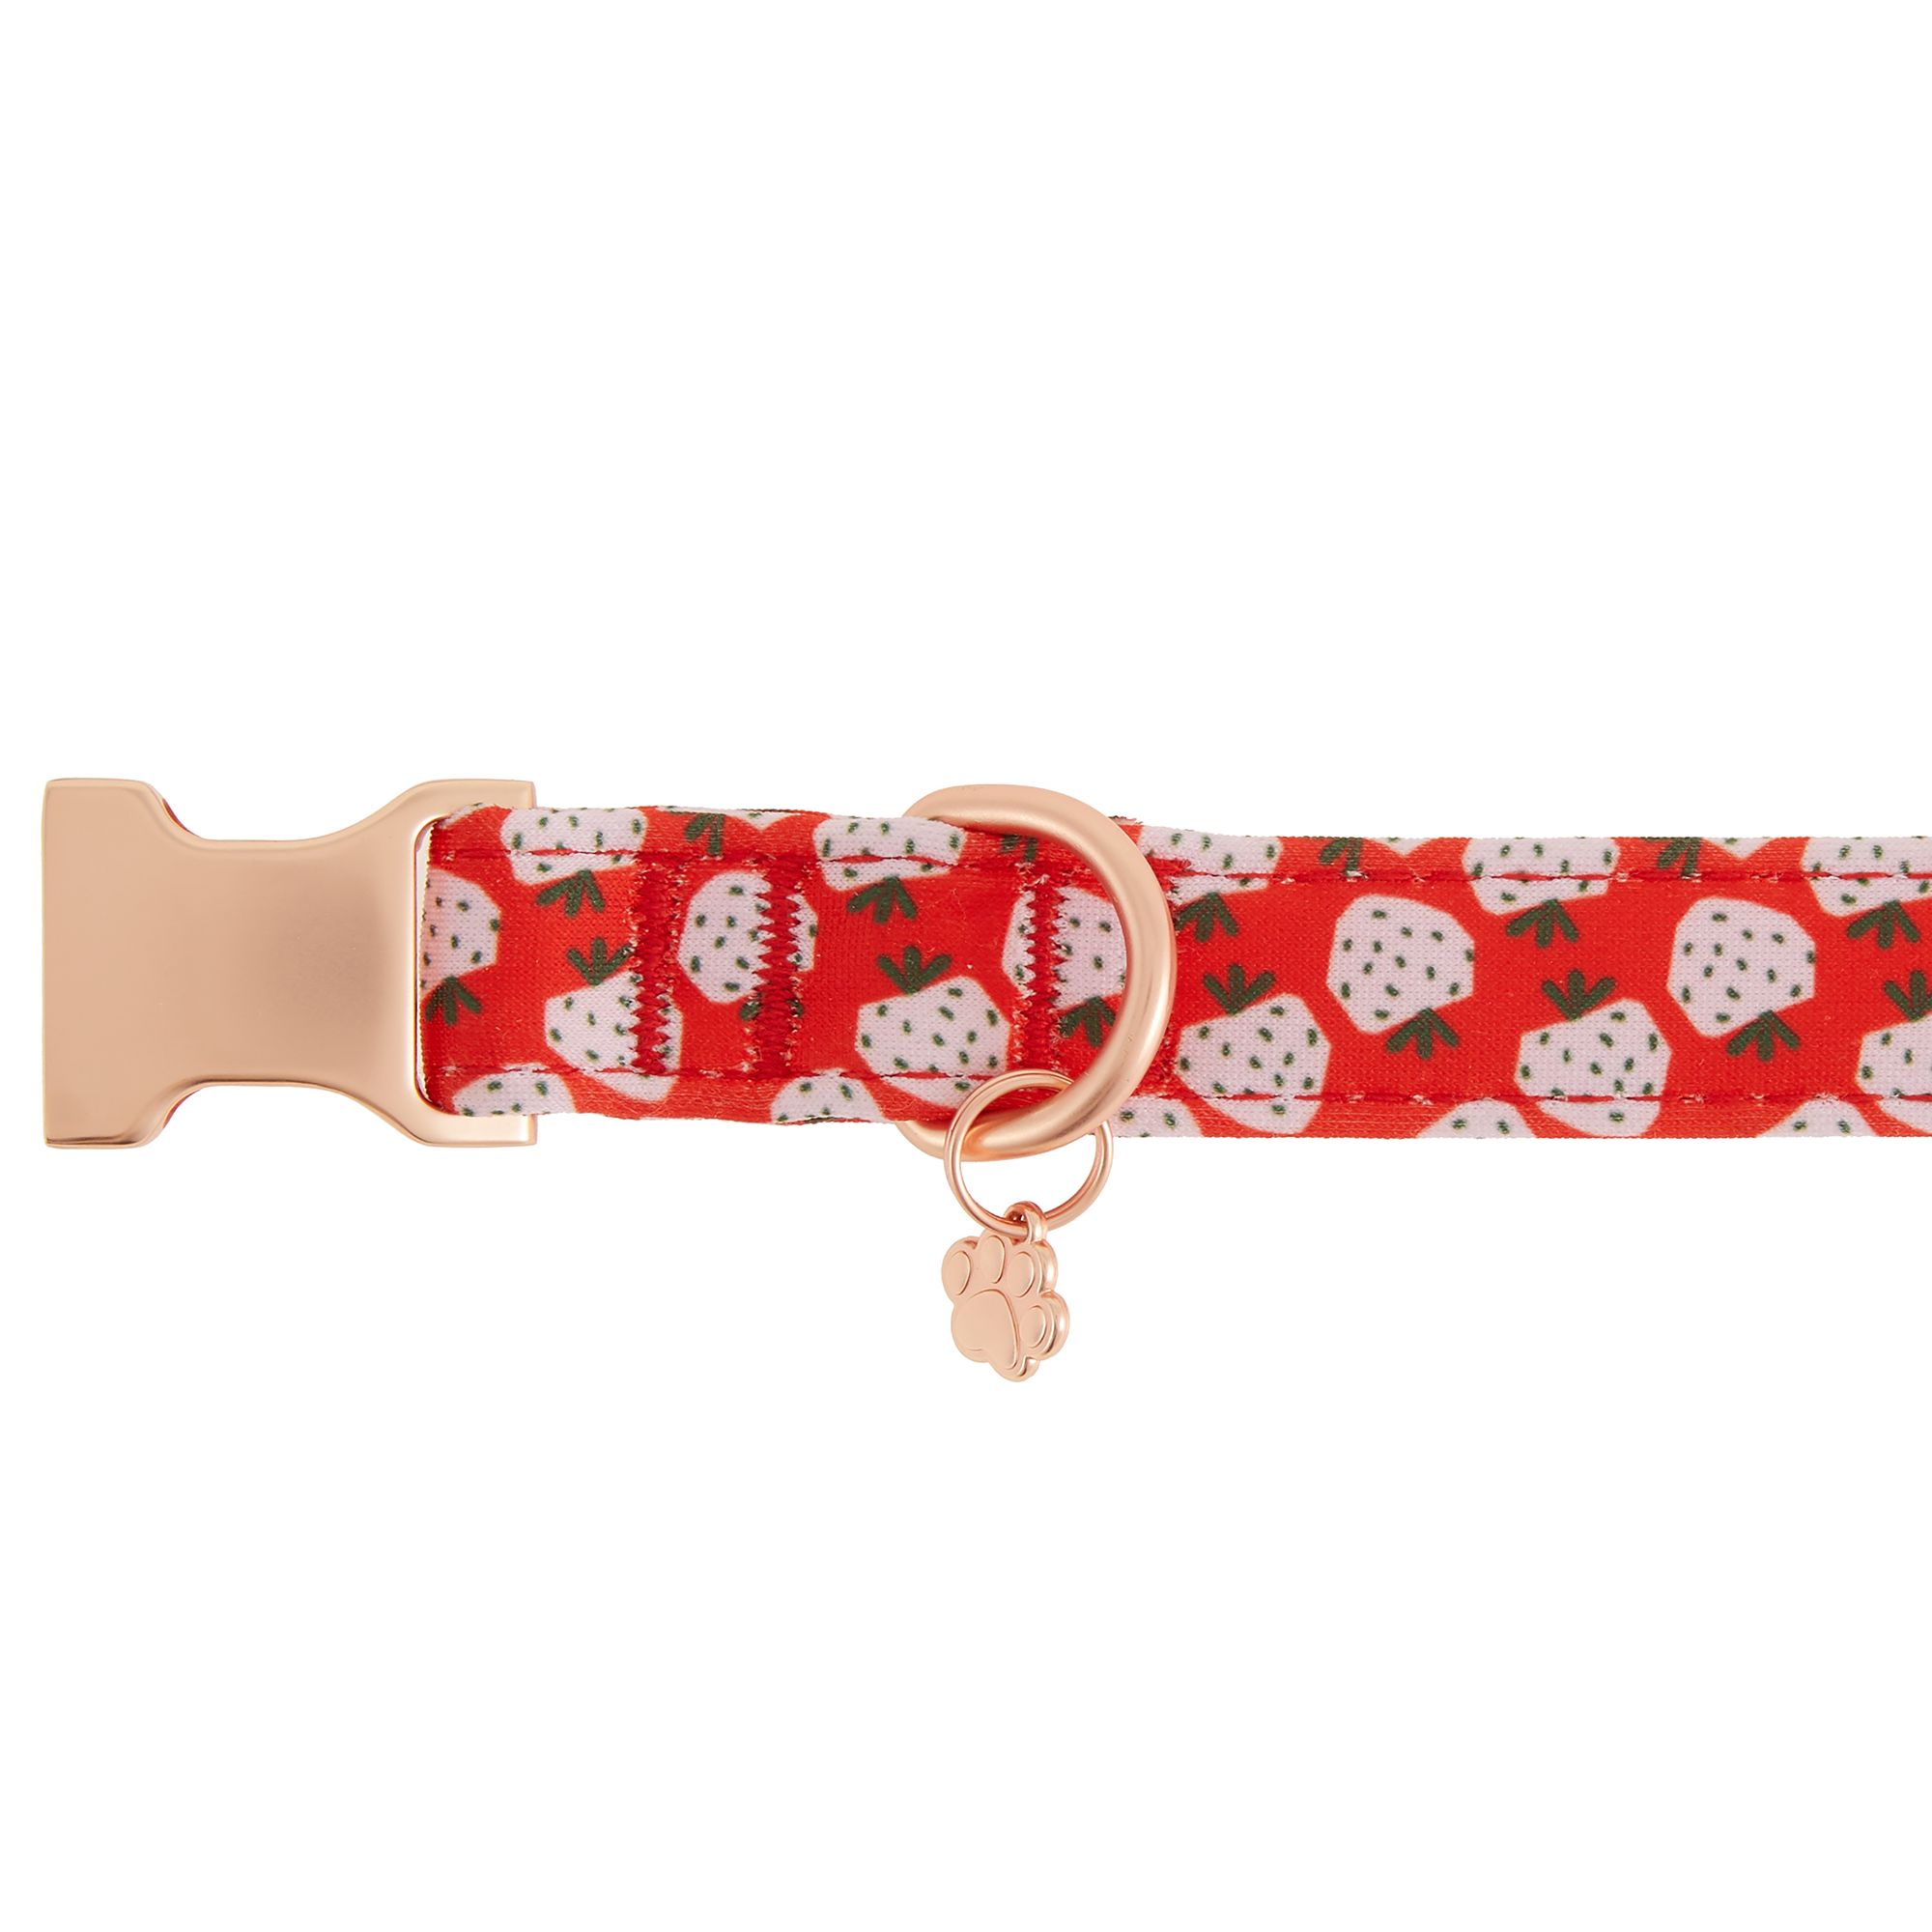 Strawberry Dog Harness & Leash Set